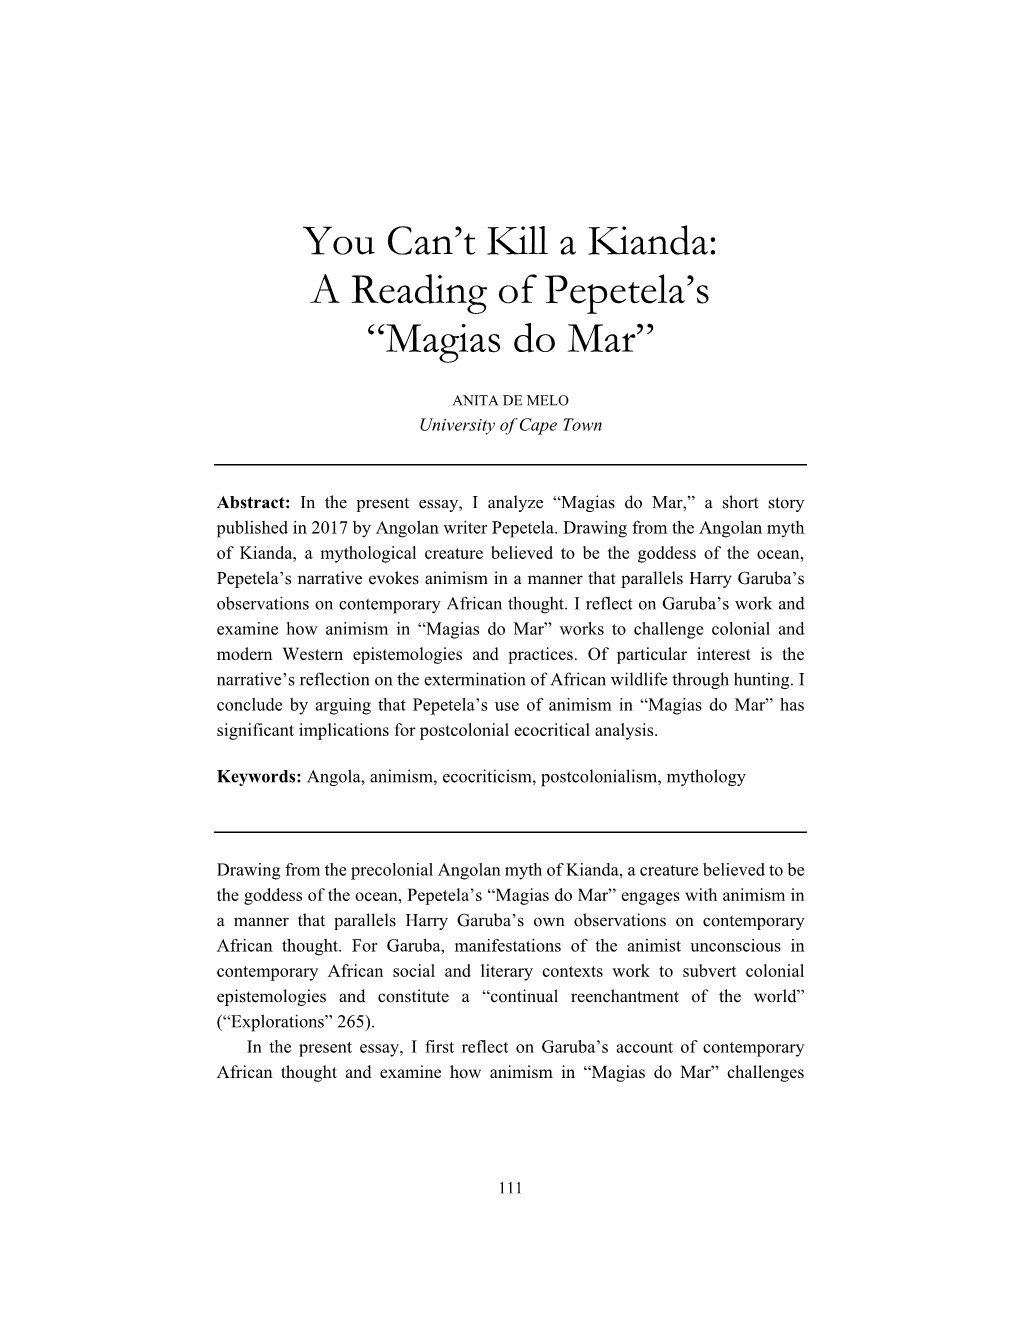 You Can't Kill a Kianda: a Reading of Pepetela's “Magias Do Mar”